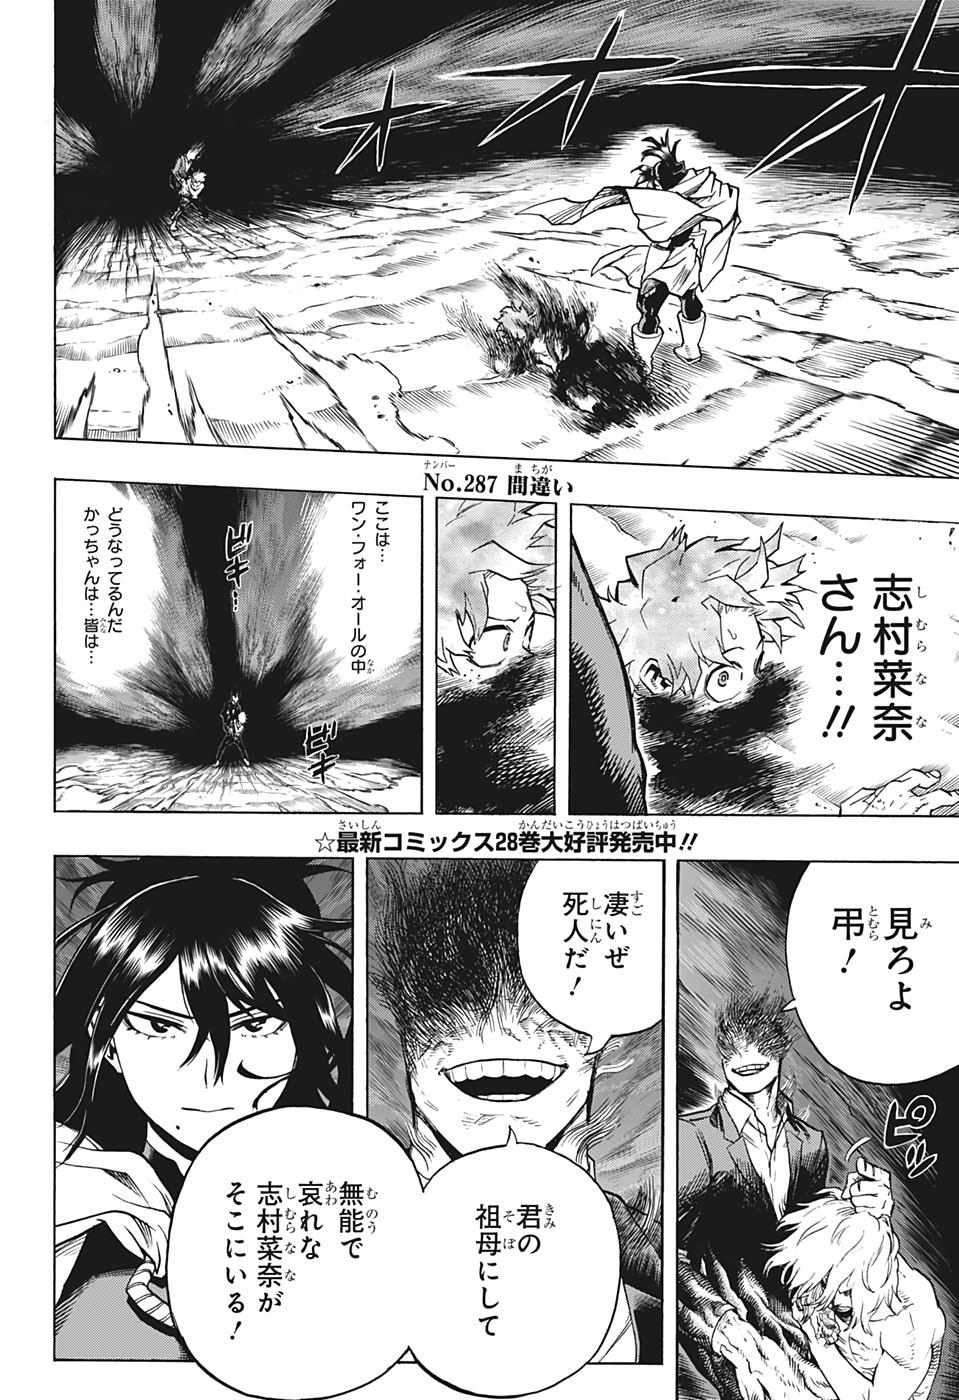 Boku no Hero Academia - Chapter 287 - Page 2